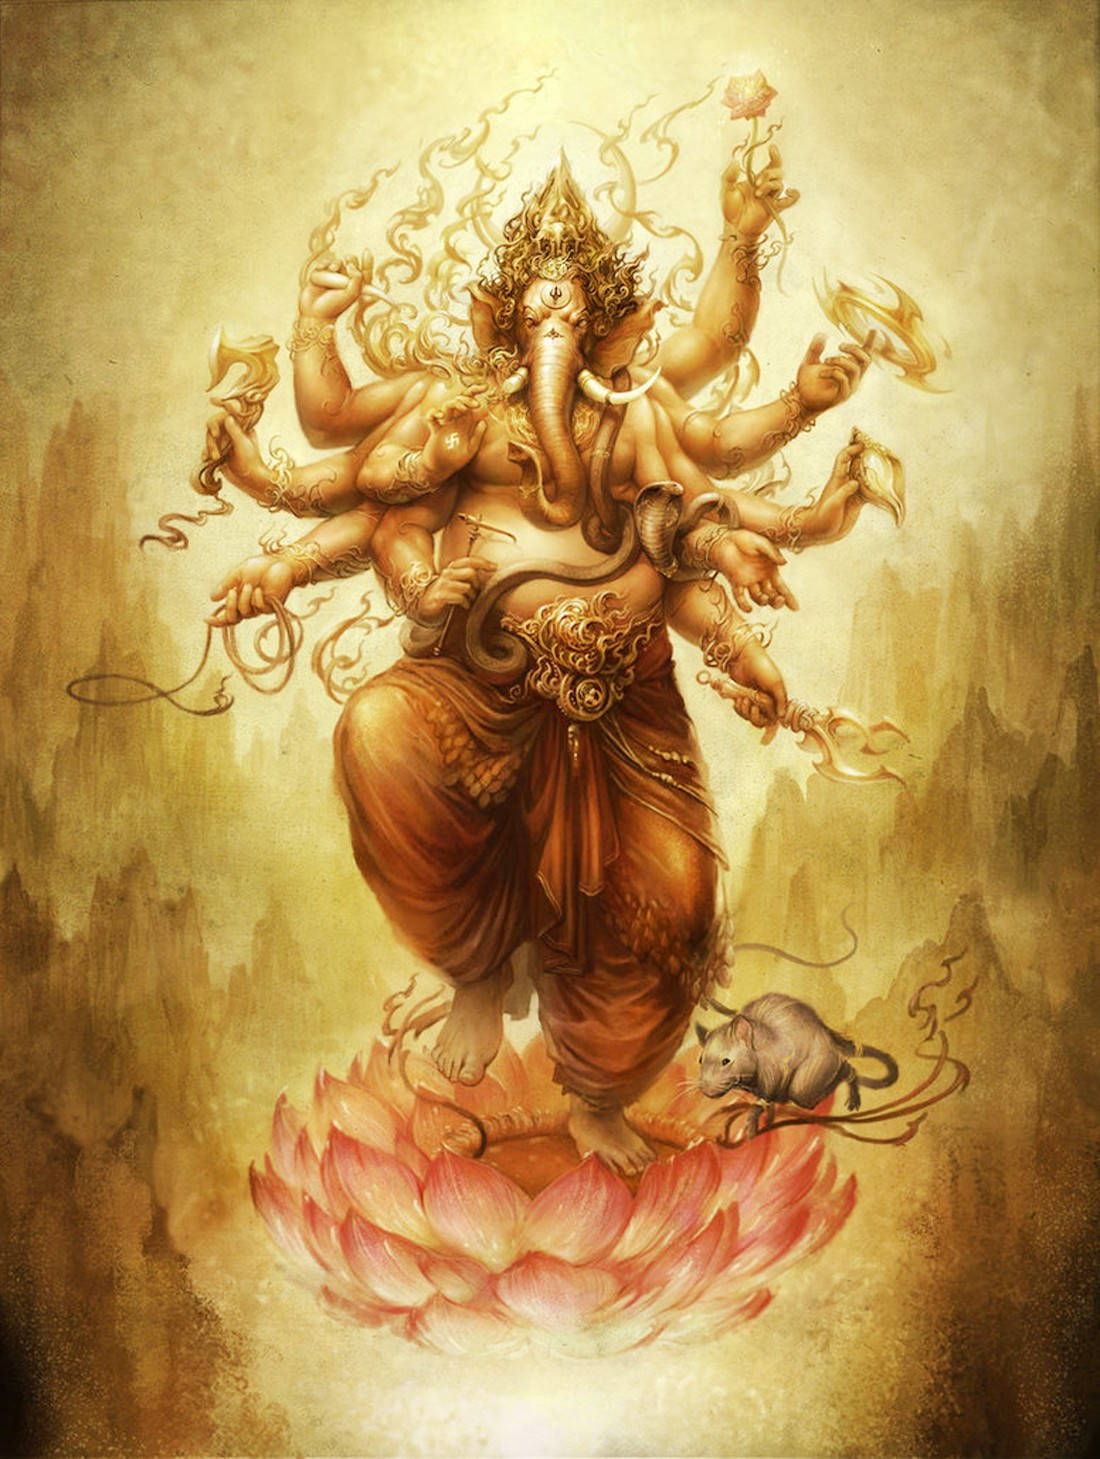 Free Ganesh Mobile Wallpaper Downloads, [100+] Ganesh Mobile Wallpapers for  FREE 